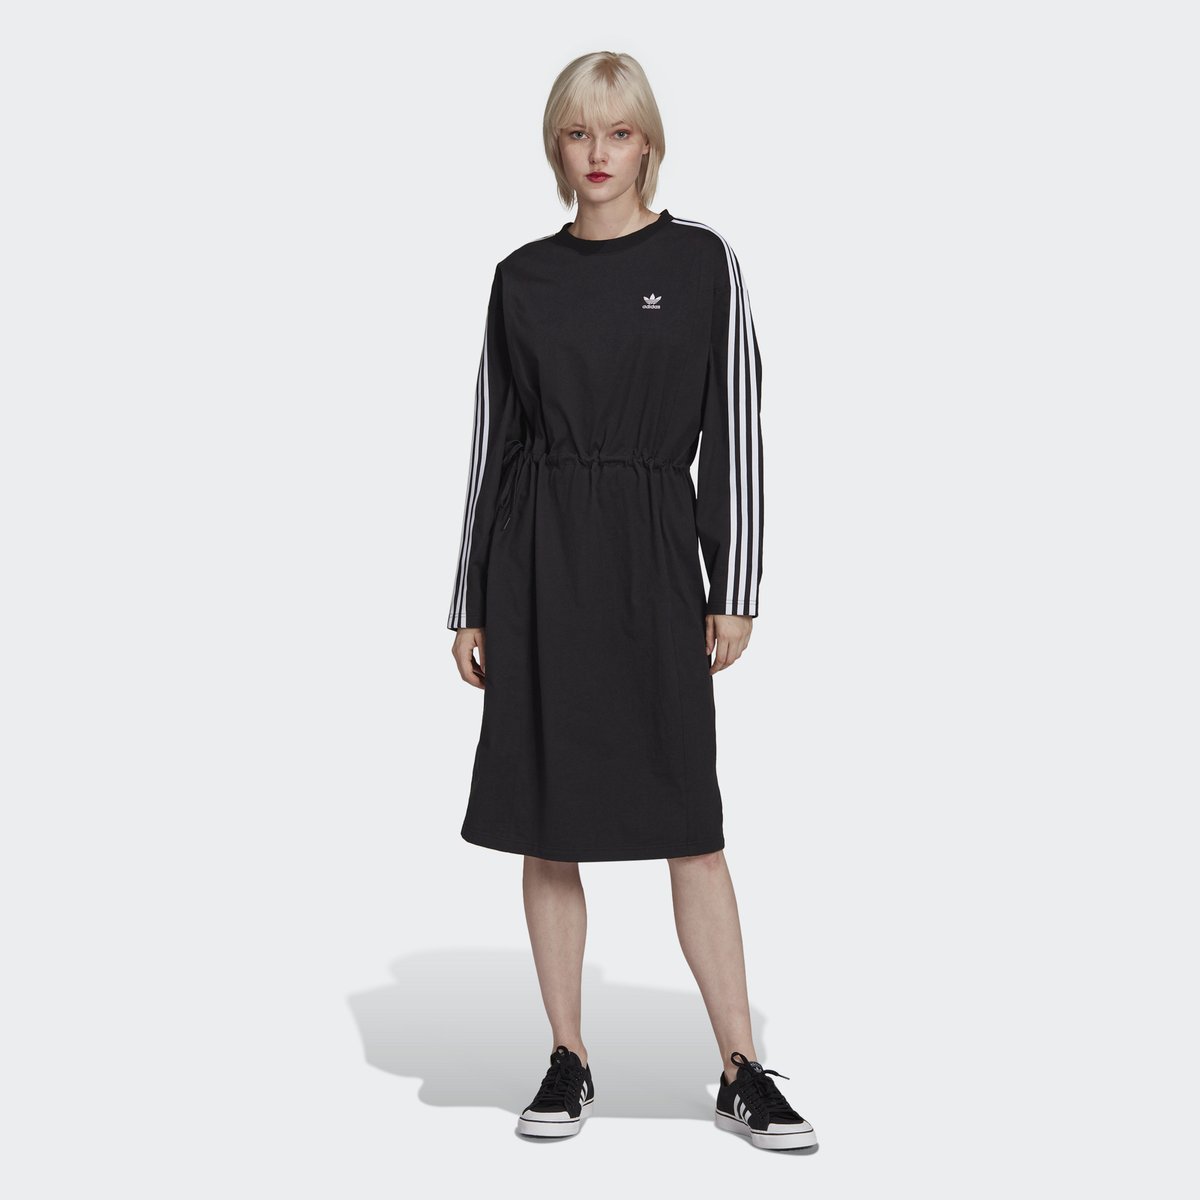 Women's Clothing - Adicolor 3-Stripes Corset - Black